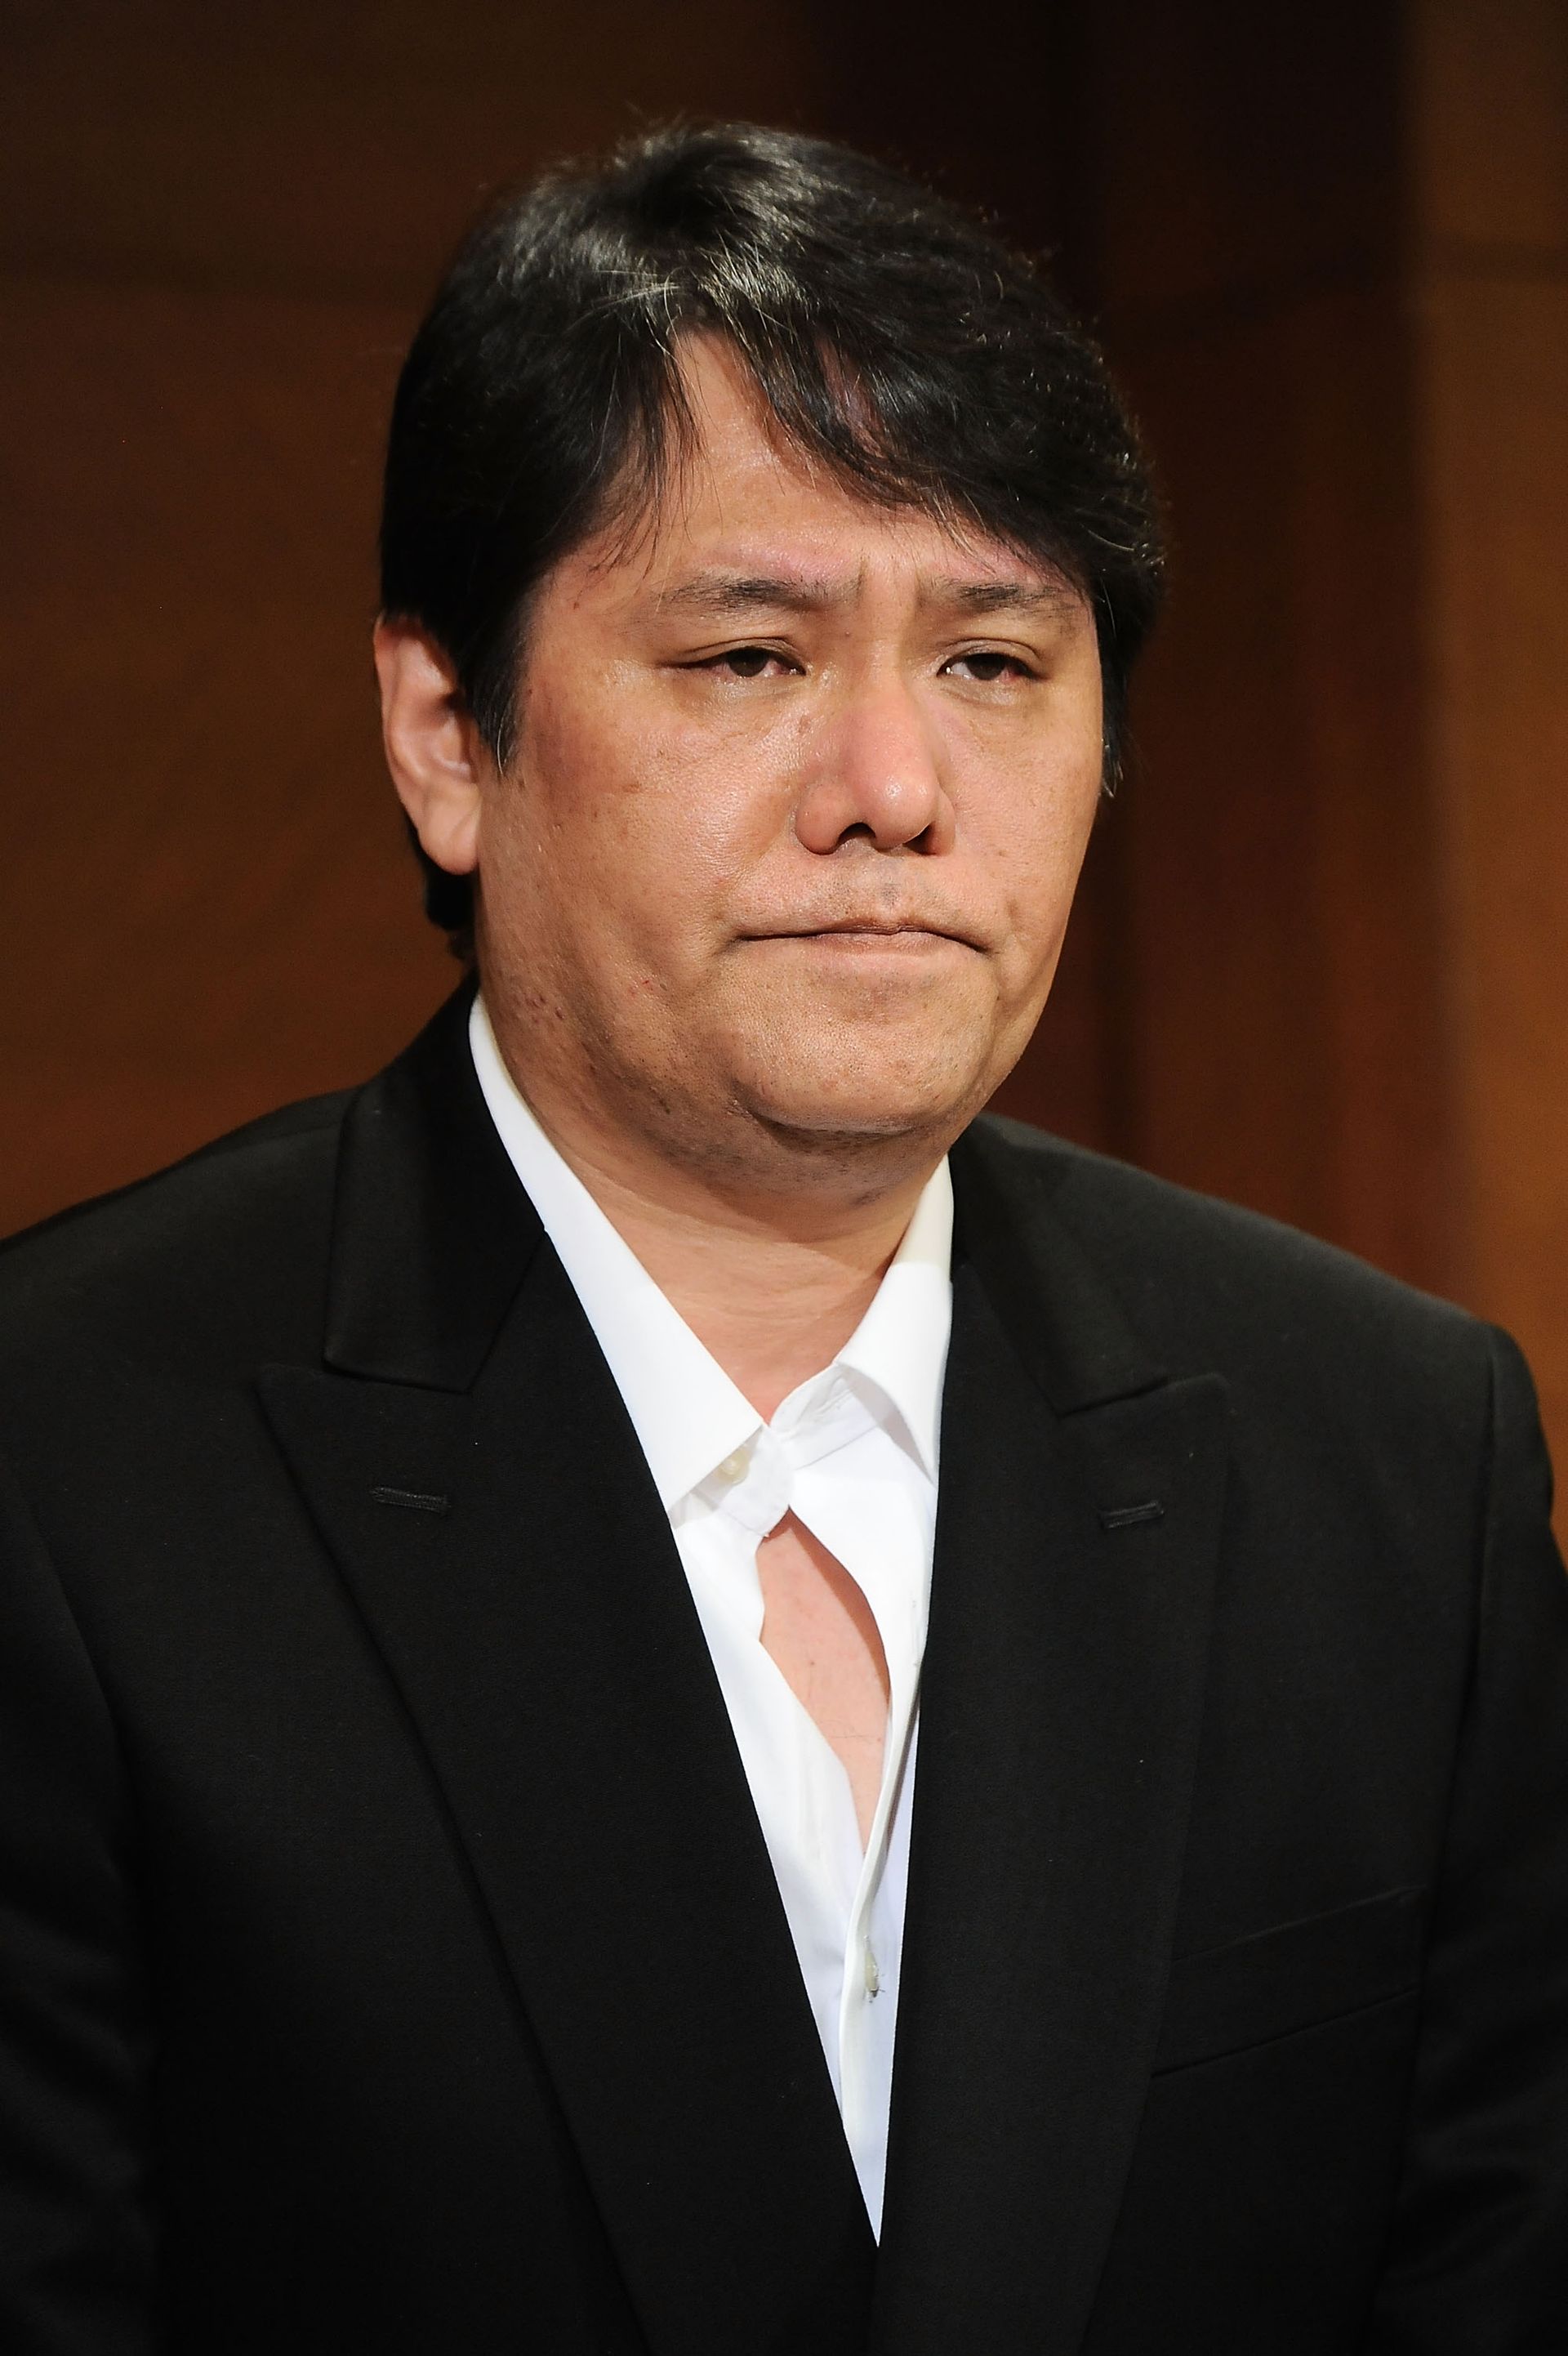 Mamoru Samuragochi s'excuse lors d'une conférence de presse, en février 2014